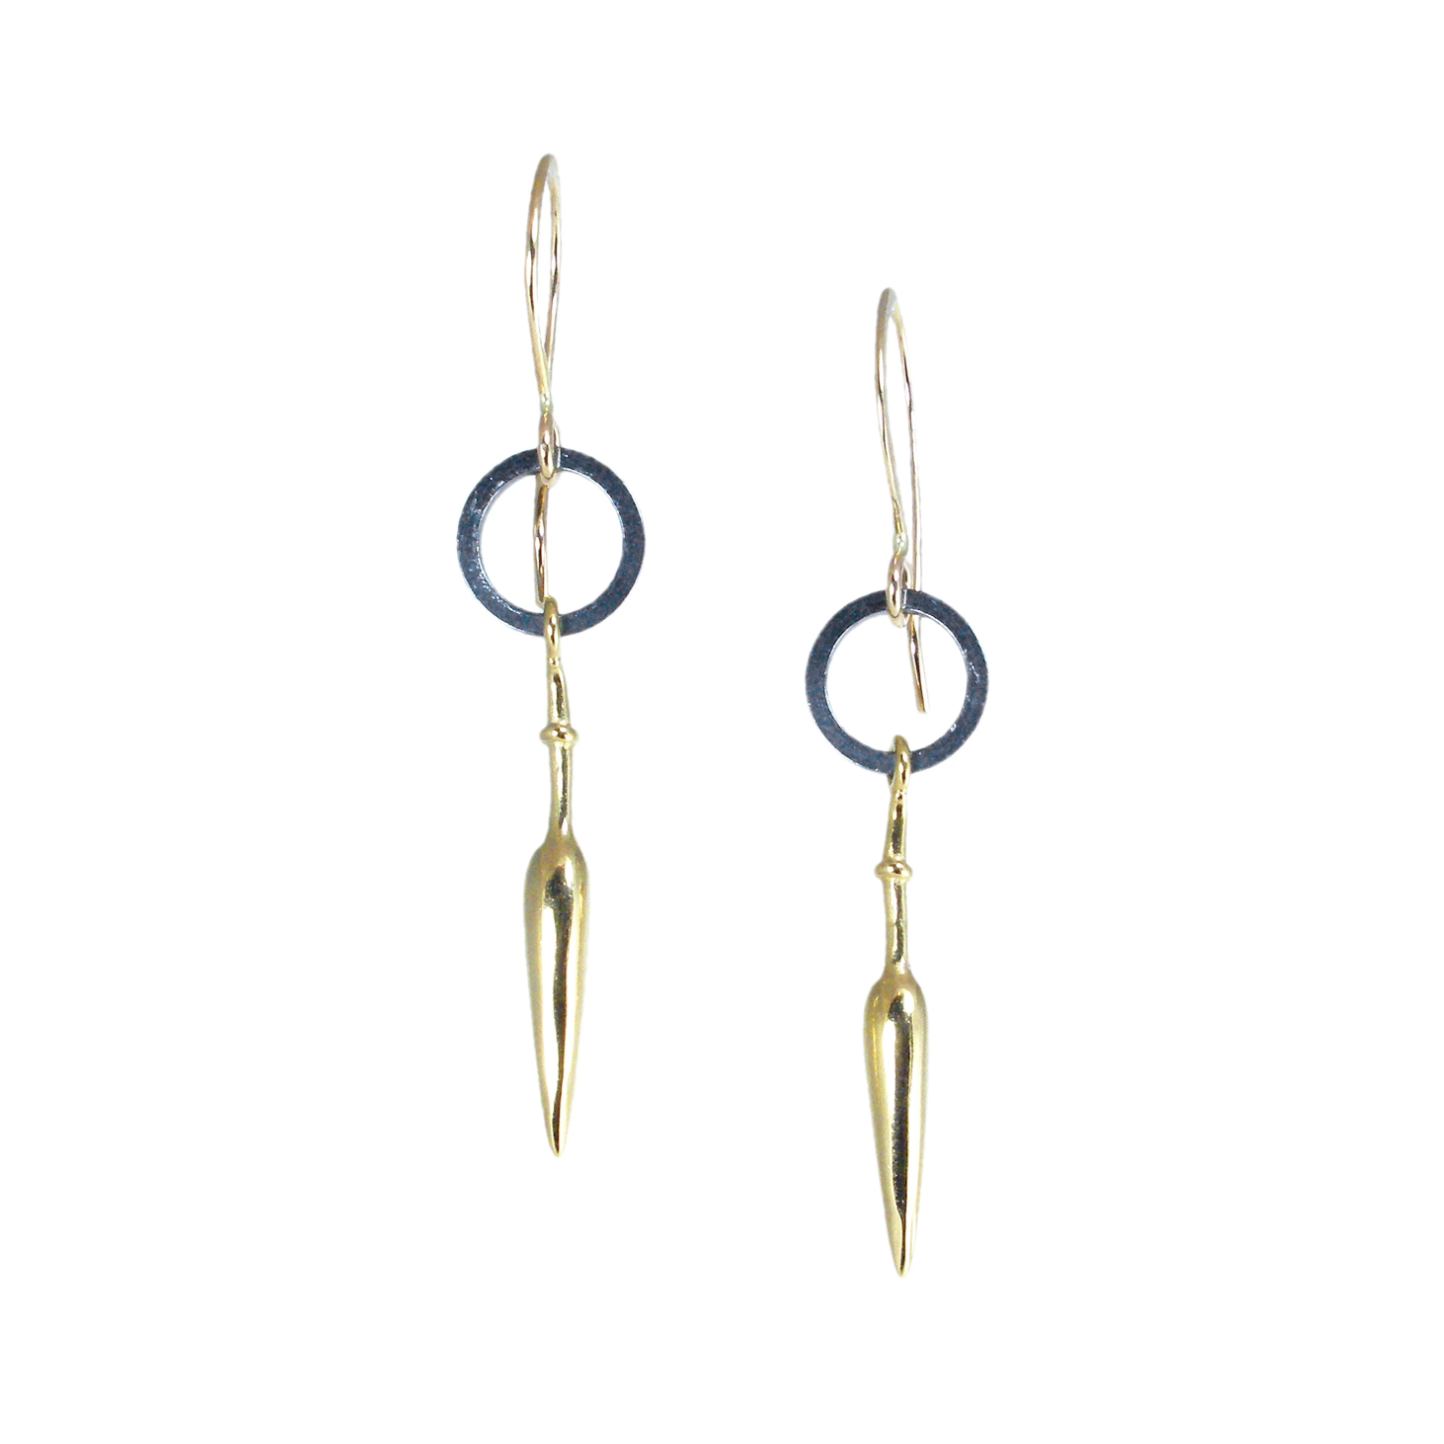 Black & Gold Spike Earrings by Q Evon